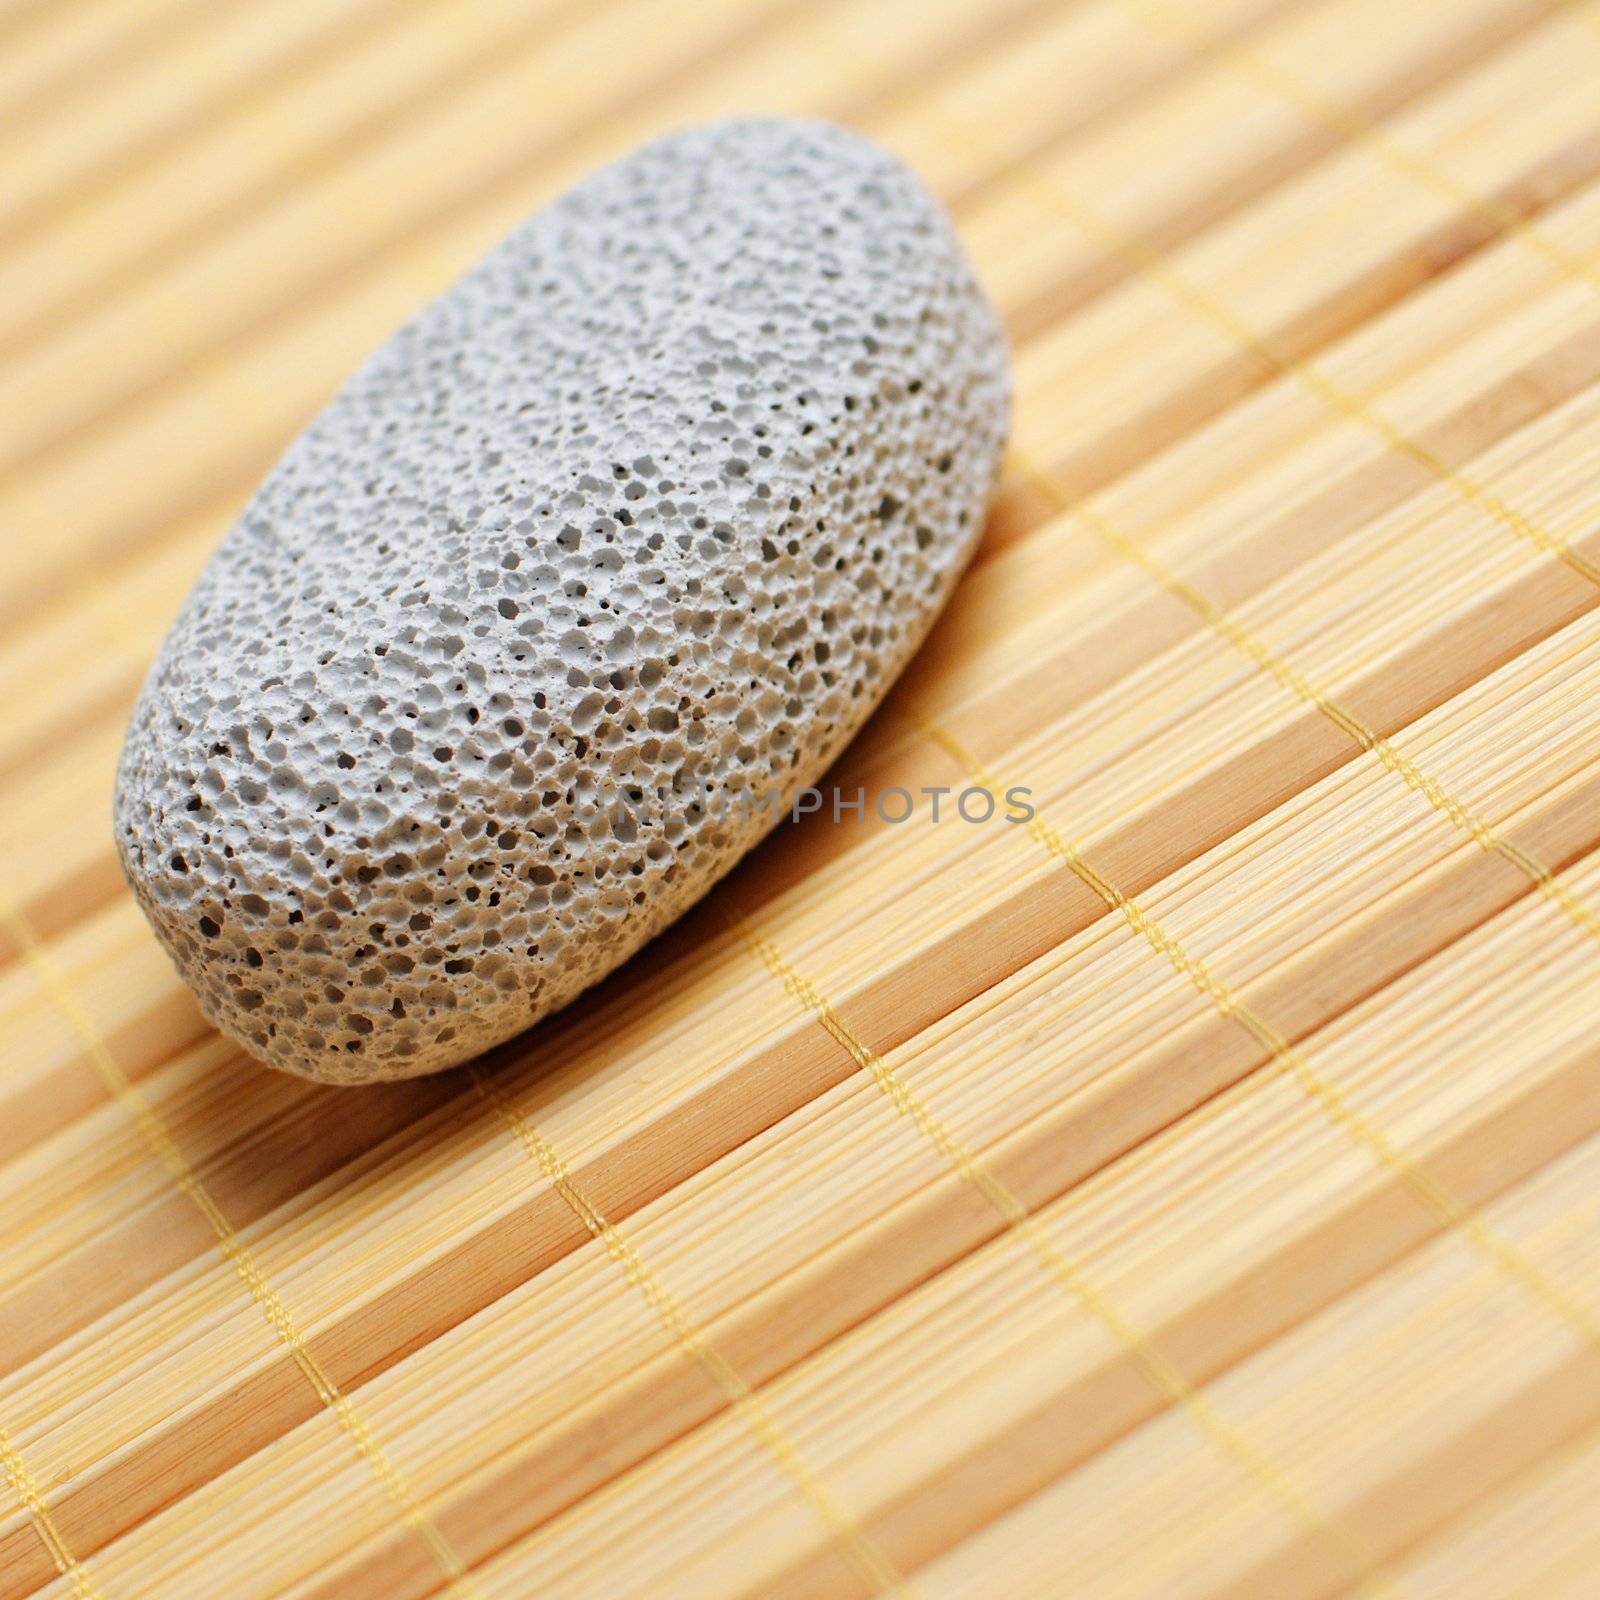 Pumice stone close up on a bamboo mat.